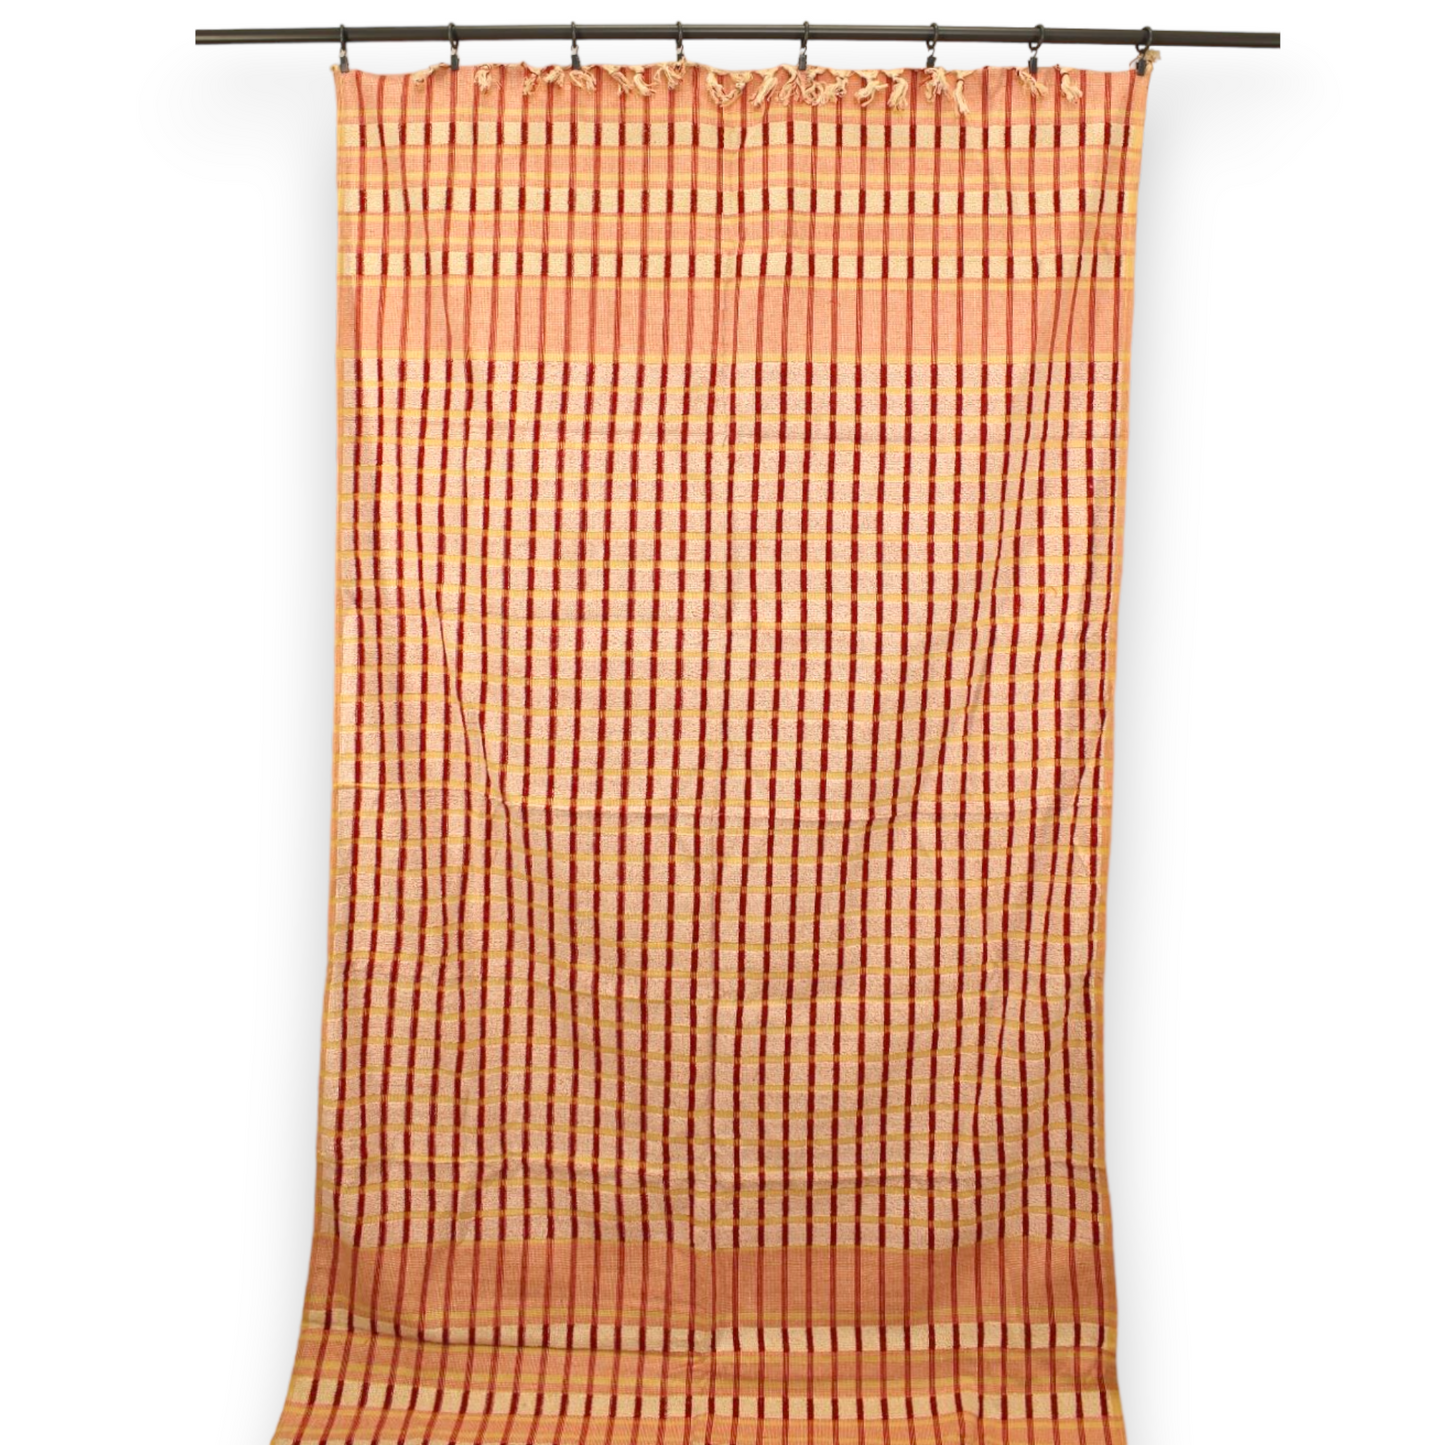 Original Turkish Hammam Towel - Lightweight Turkish Towel